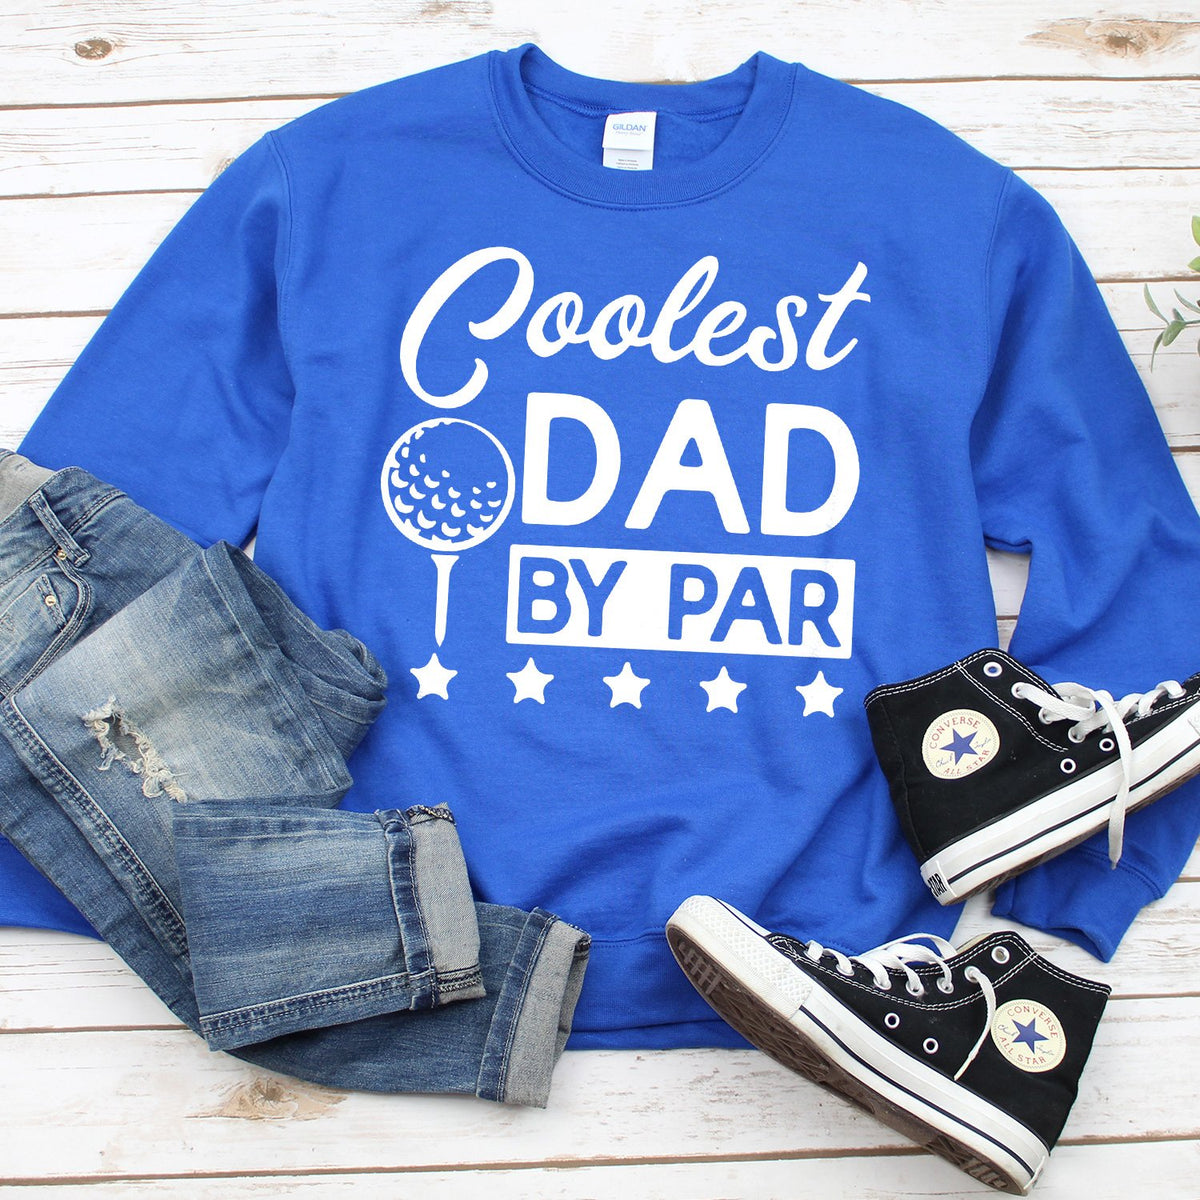 Coolest Dad By Par - Long Sleeve Heavy Crewneck Sweatshirt